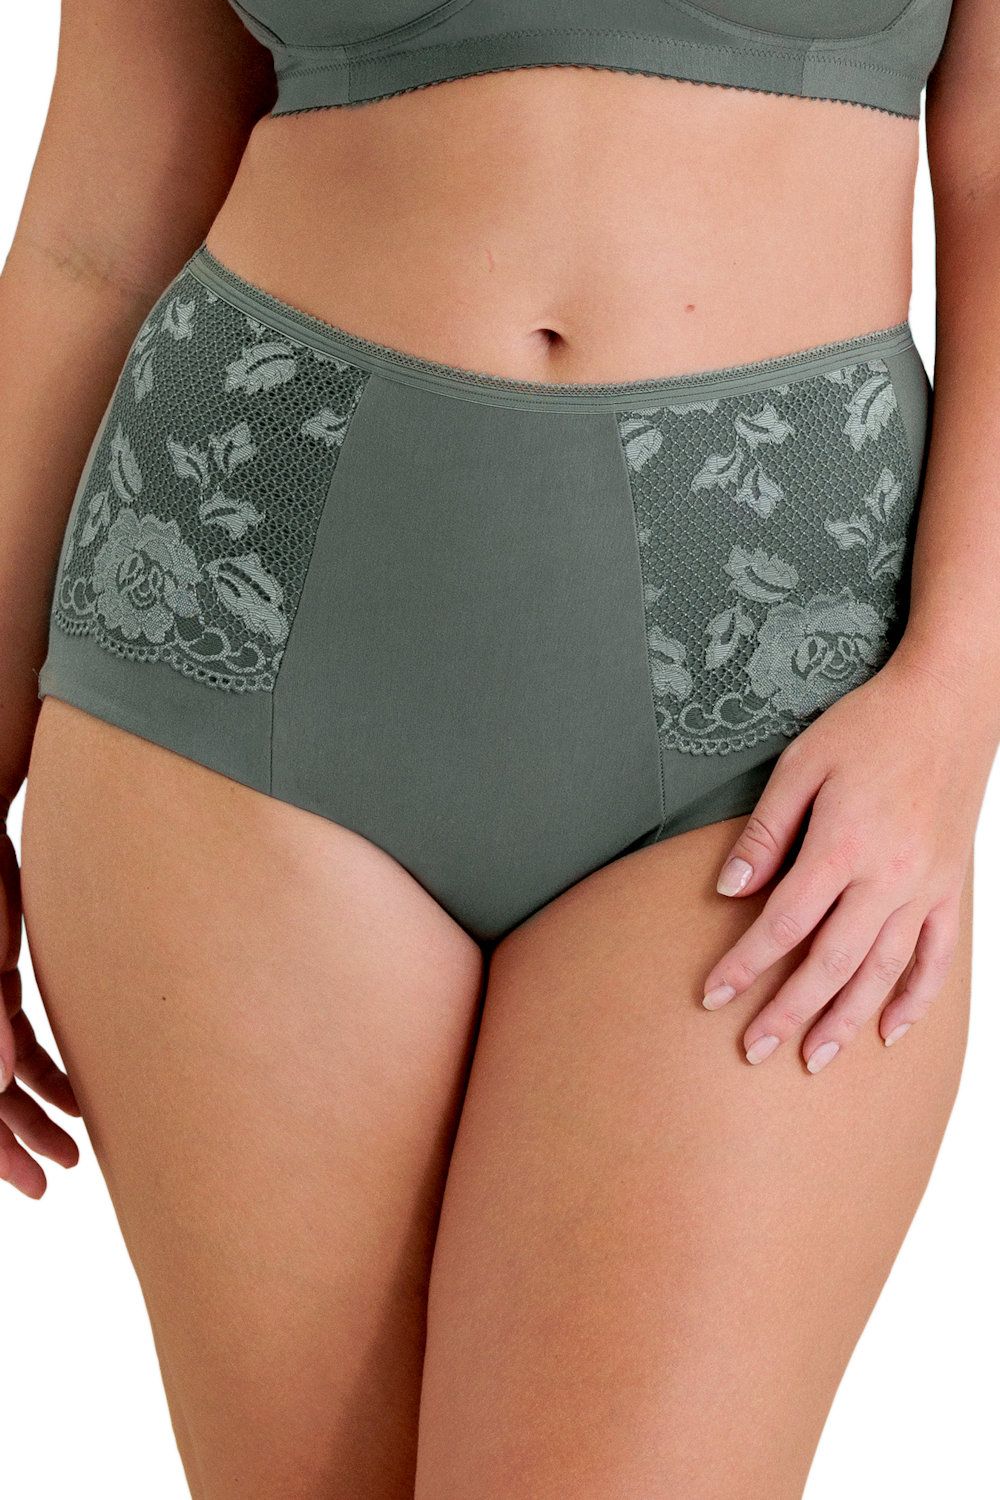 LEPSJGC 3 Pcs/lot Lace Panties Seamless Women Underwear Briefs